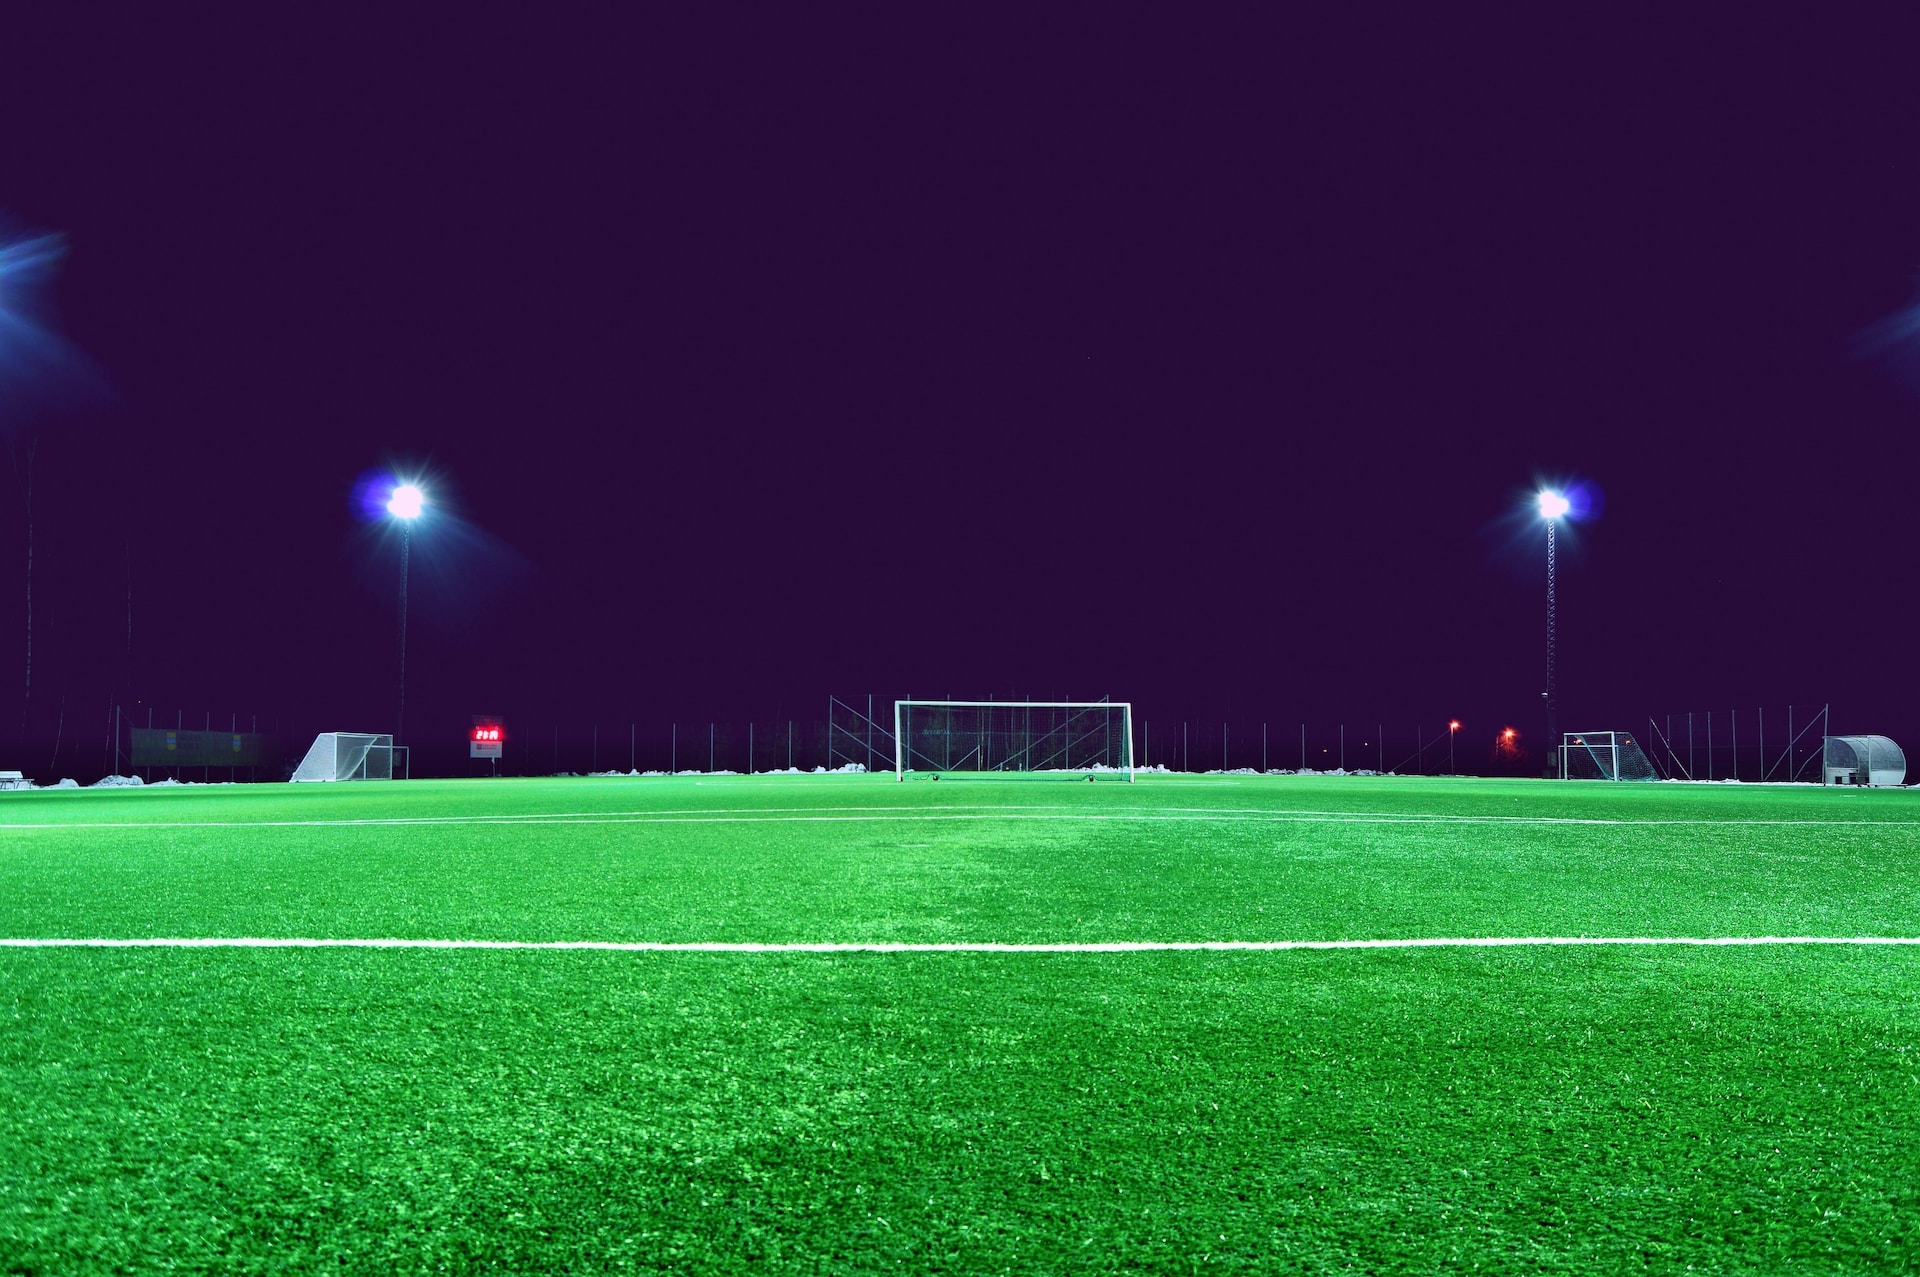 A football pitch